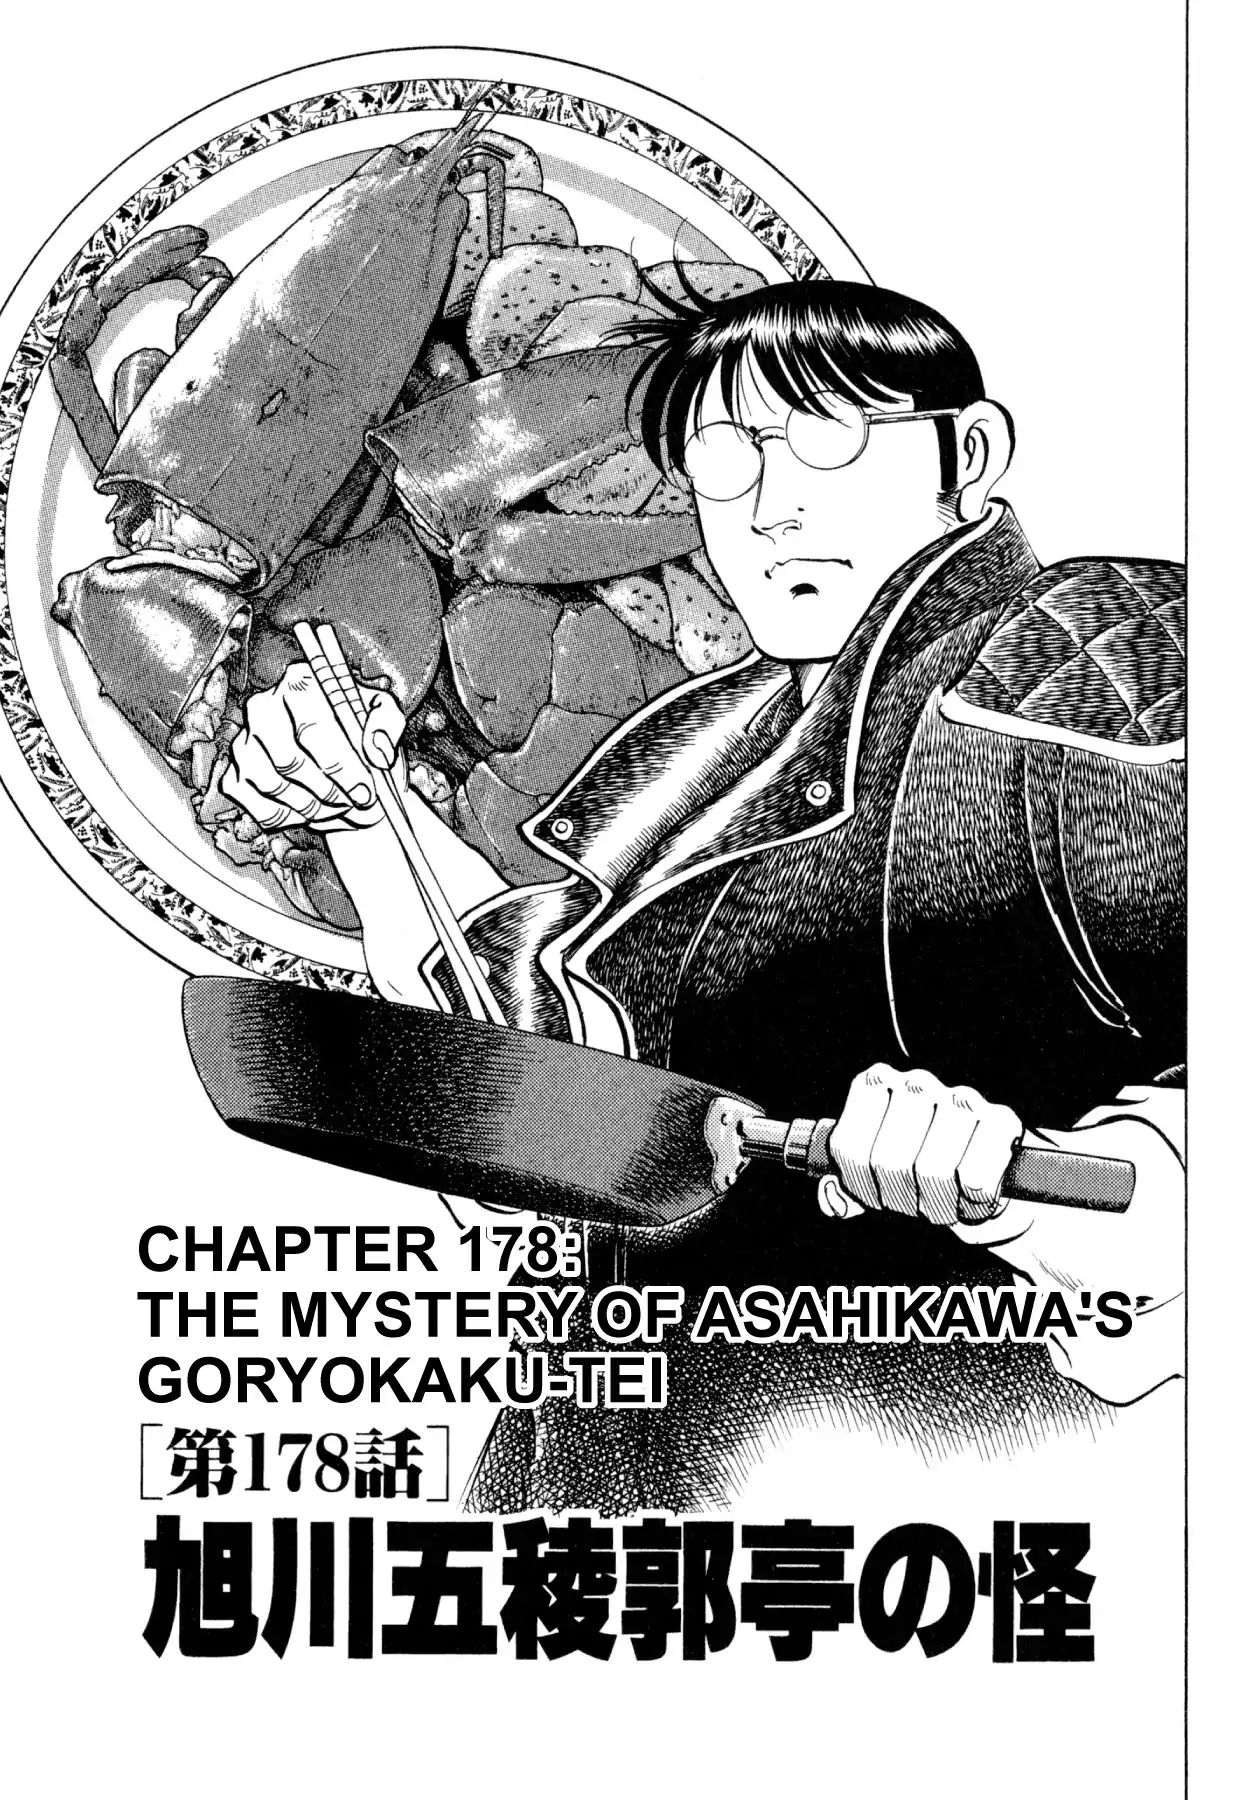 Shoku King VOL.20 CHAPTER 178: THE MYSTERY OF ASAHIKAWA'S GORYOKAKU-TEI